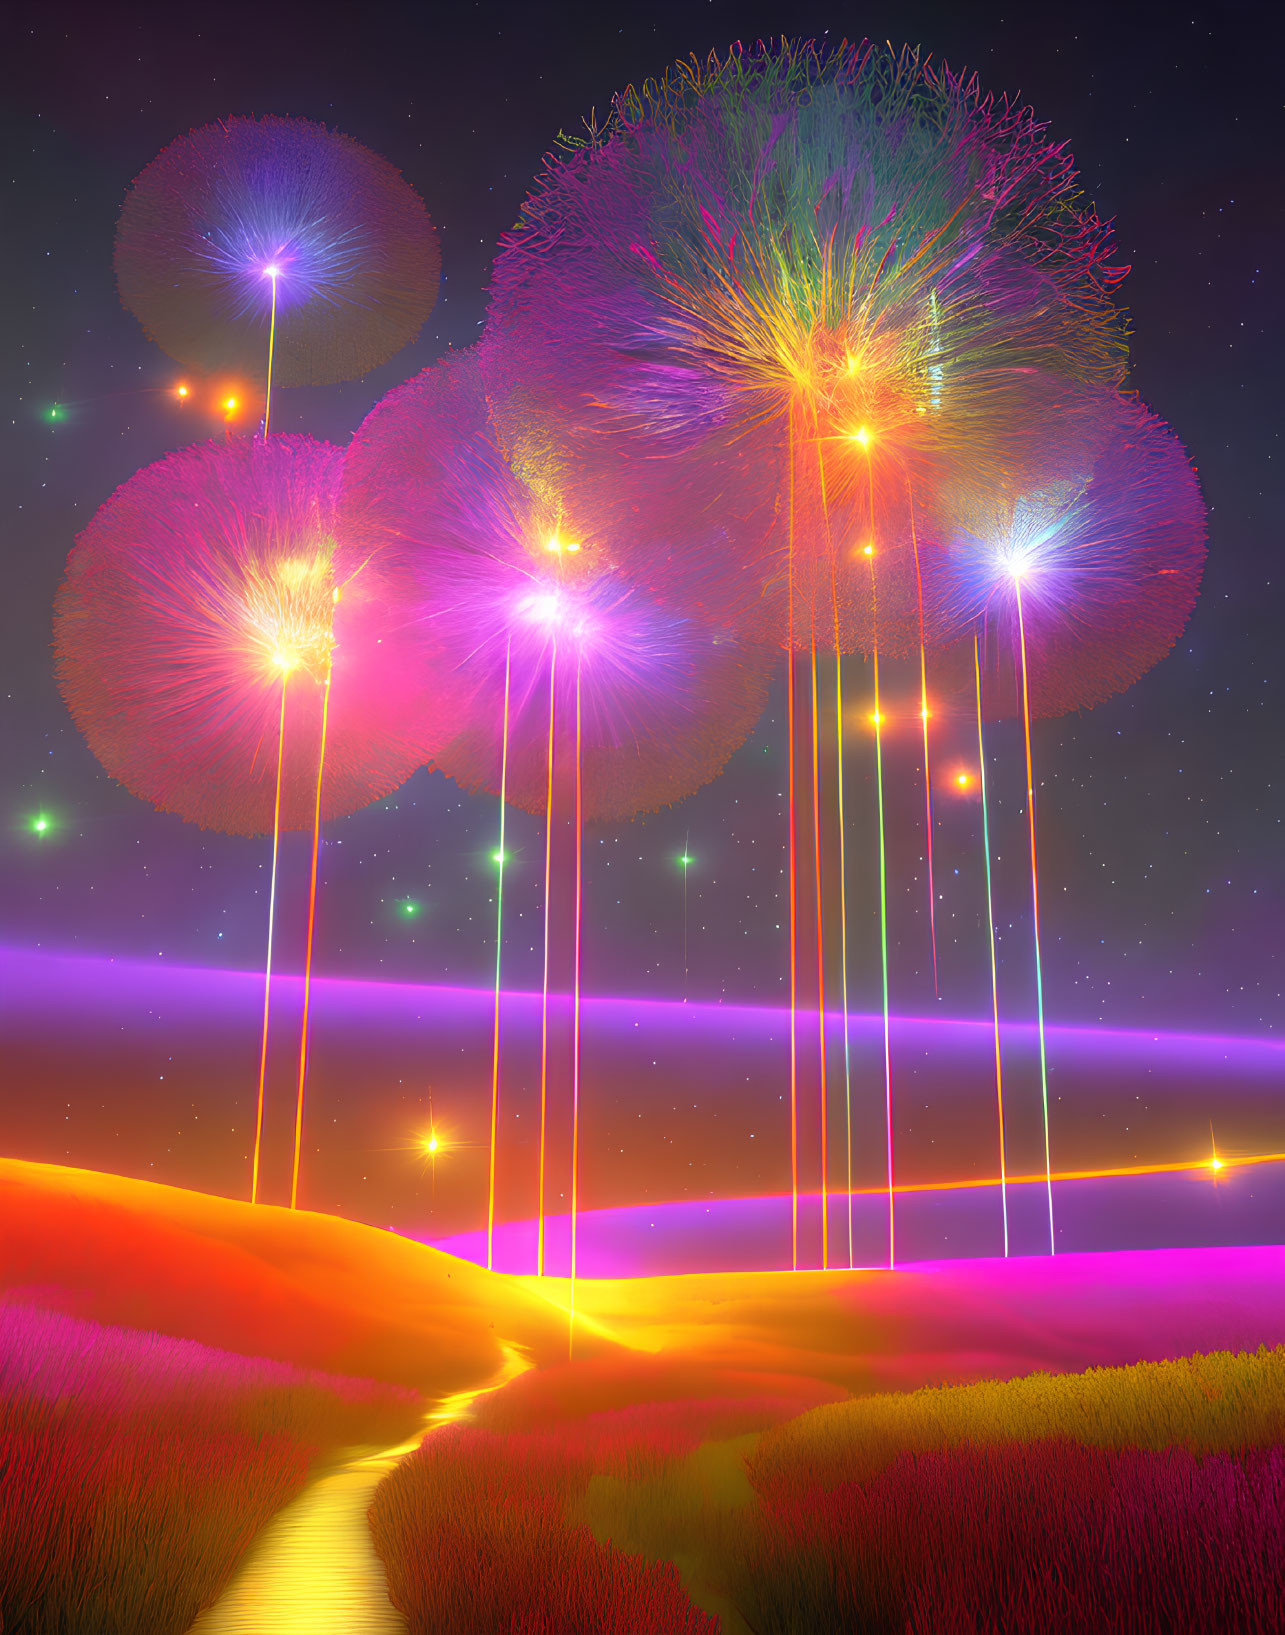 Colorful digital artwork: Otherworldly landscape with glowing dandelion-like structures